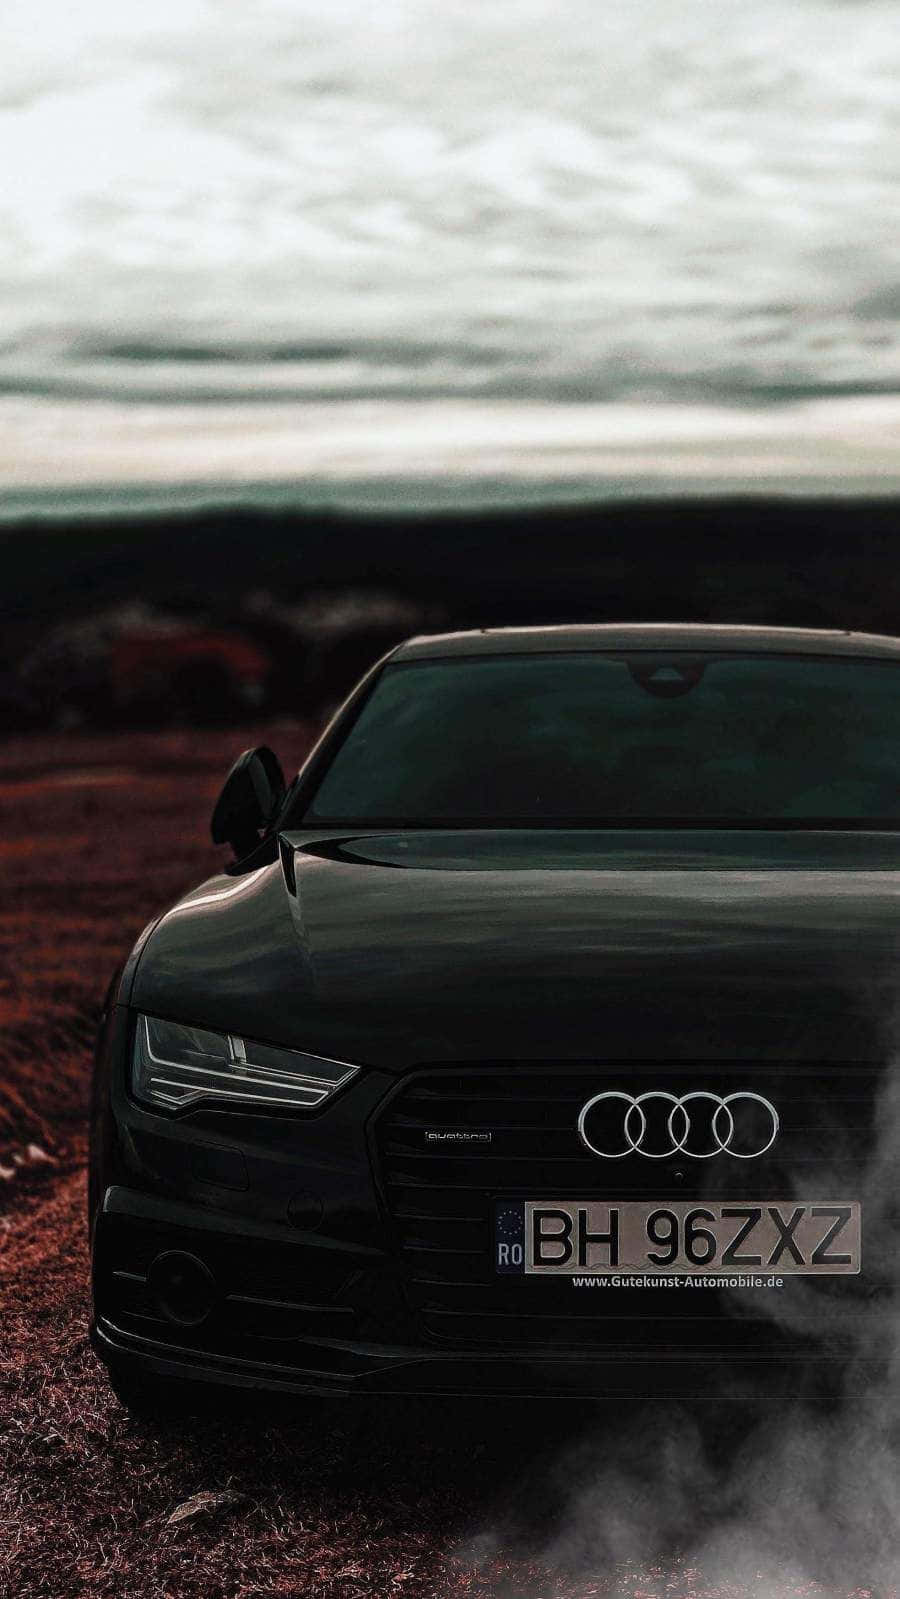 A sleek Audi iPhone concept for tech-savvy car lovers. Wallpaper